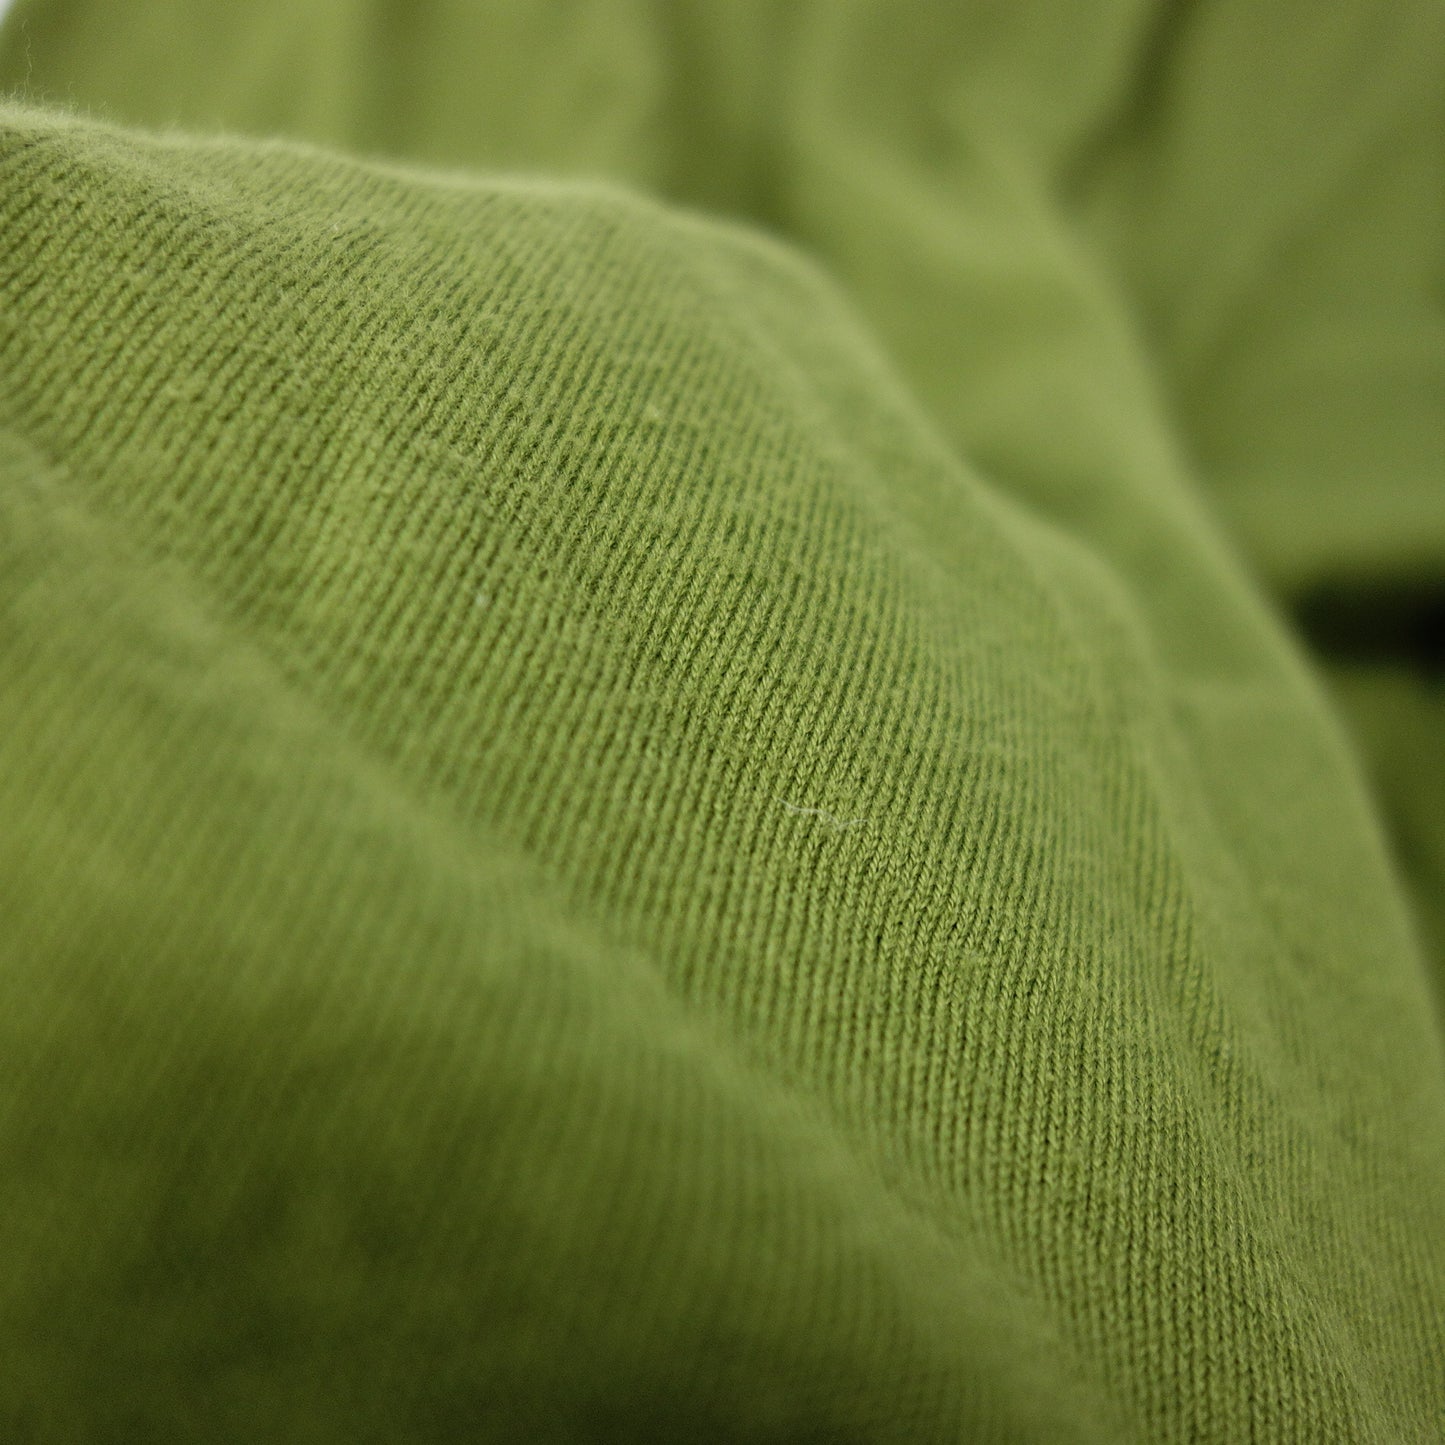 Used JOHN SMEDLEY Knit Sweater Long Sleeve V Neck Cotton S Men's Green JOHN SMEDLEY [AFB29] 